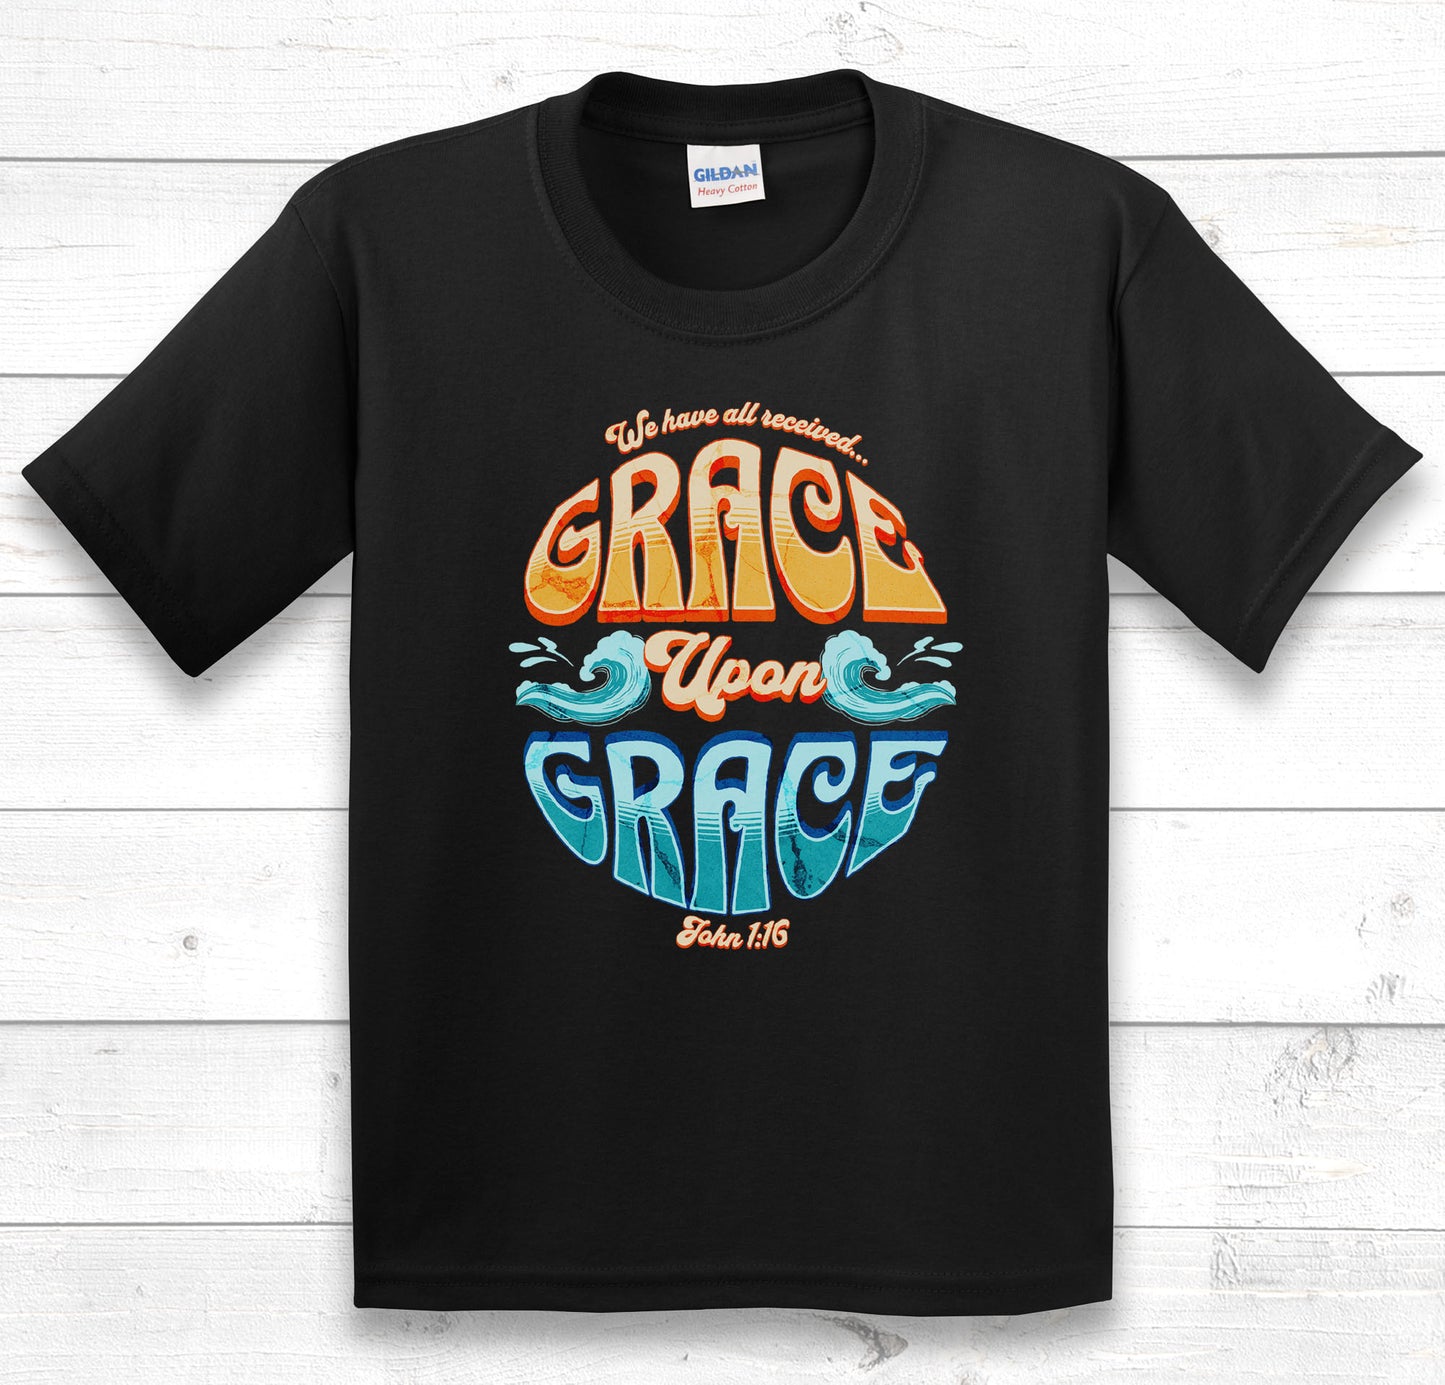 Grace Upon Grace kids t-shirt in Black